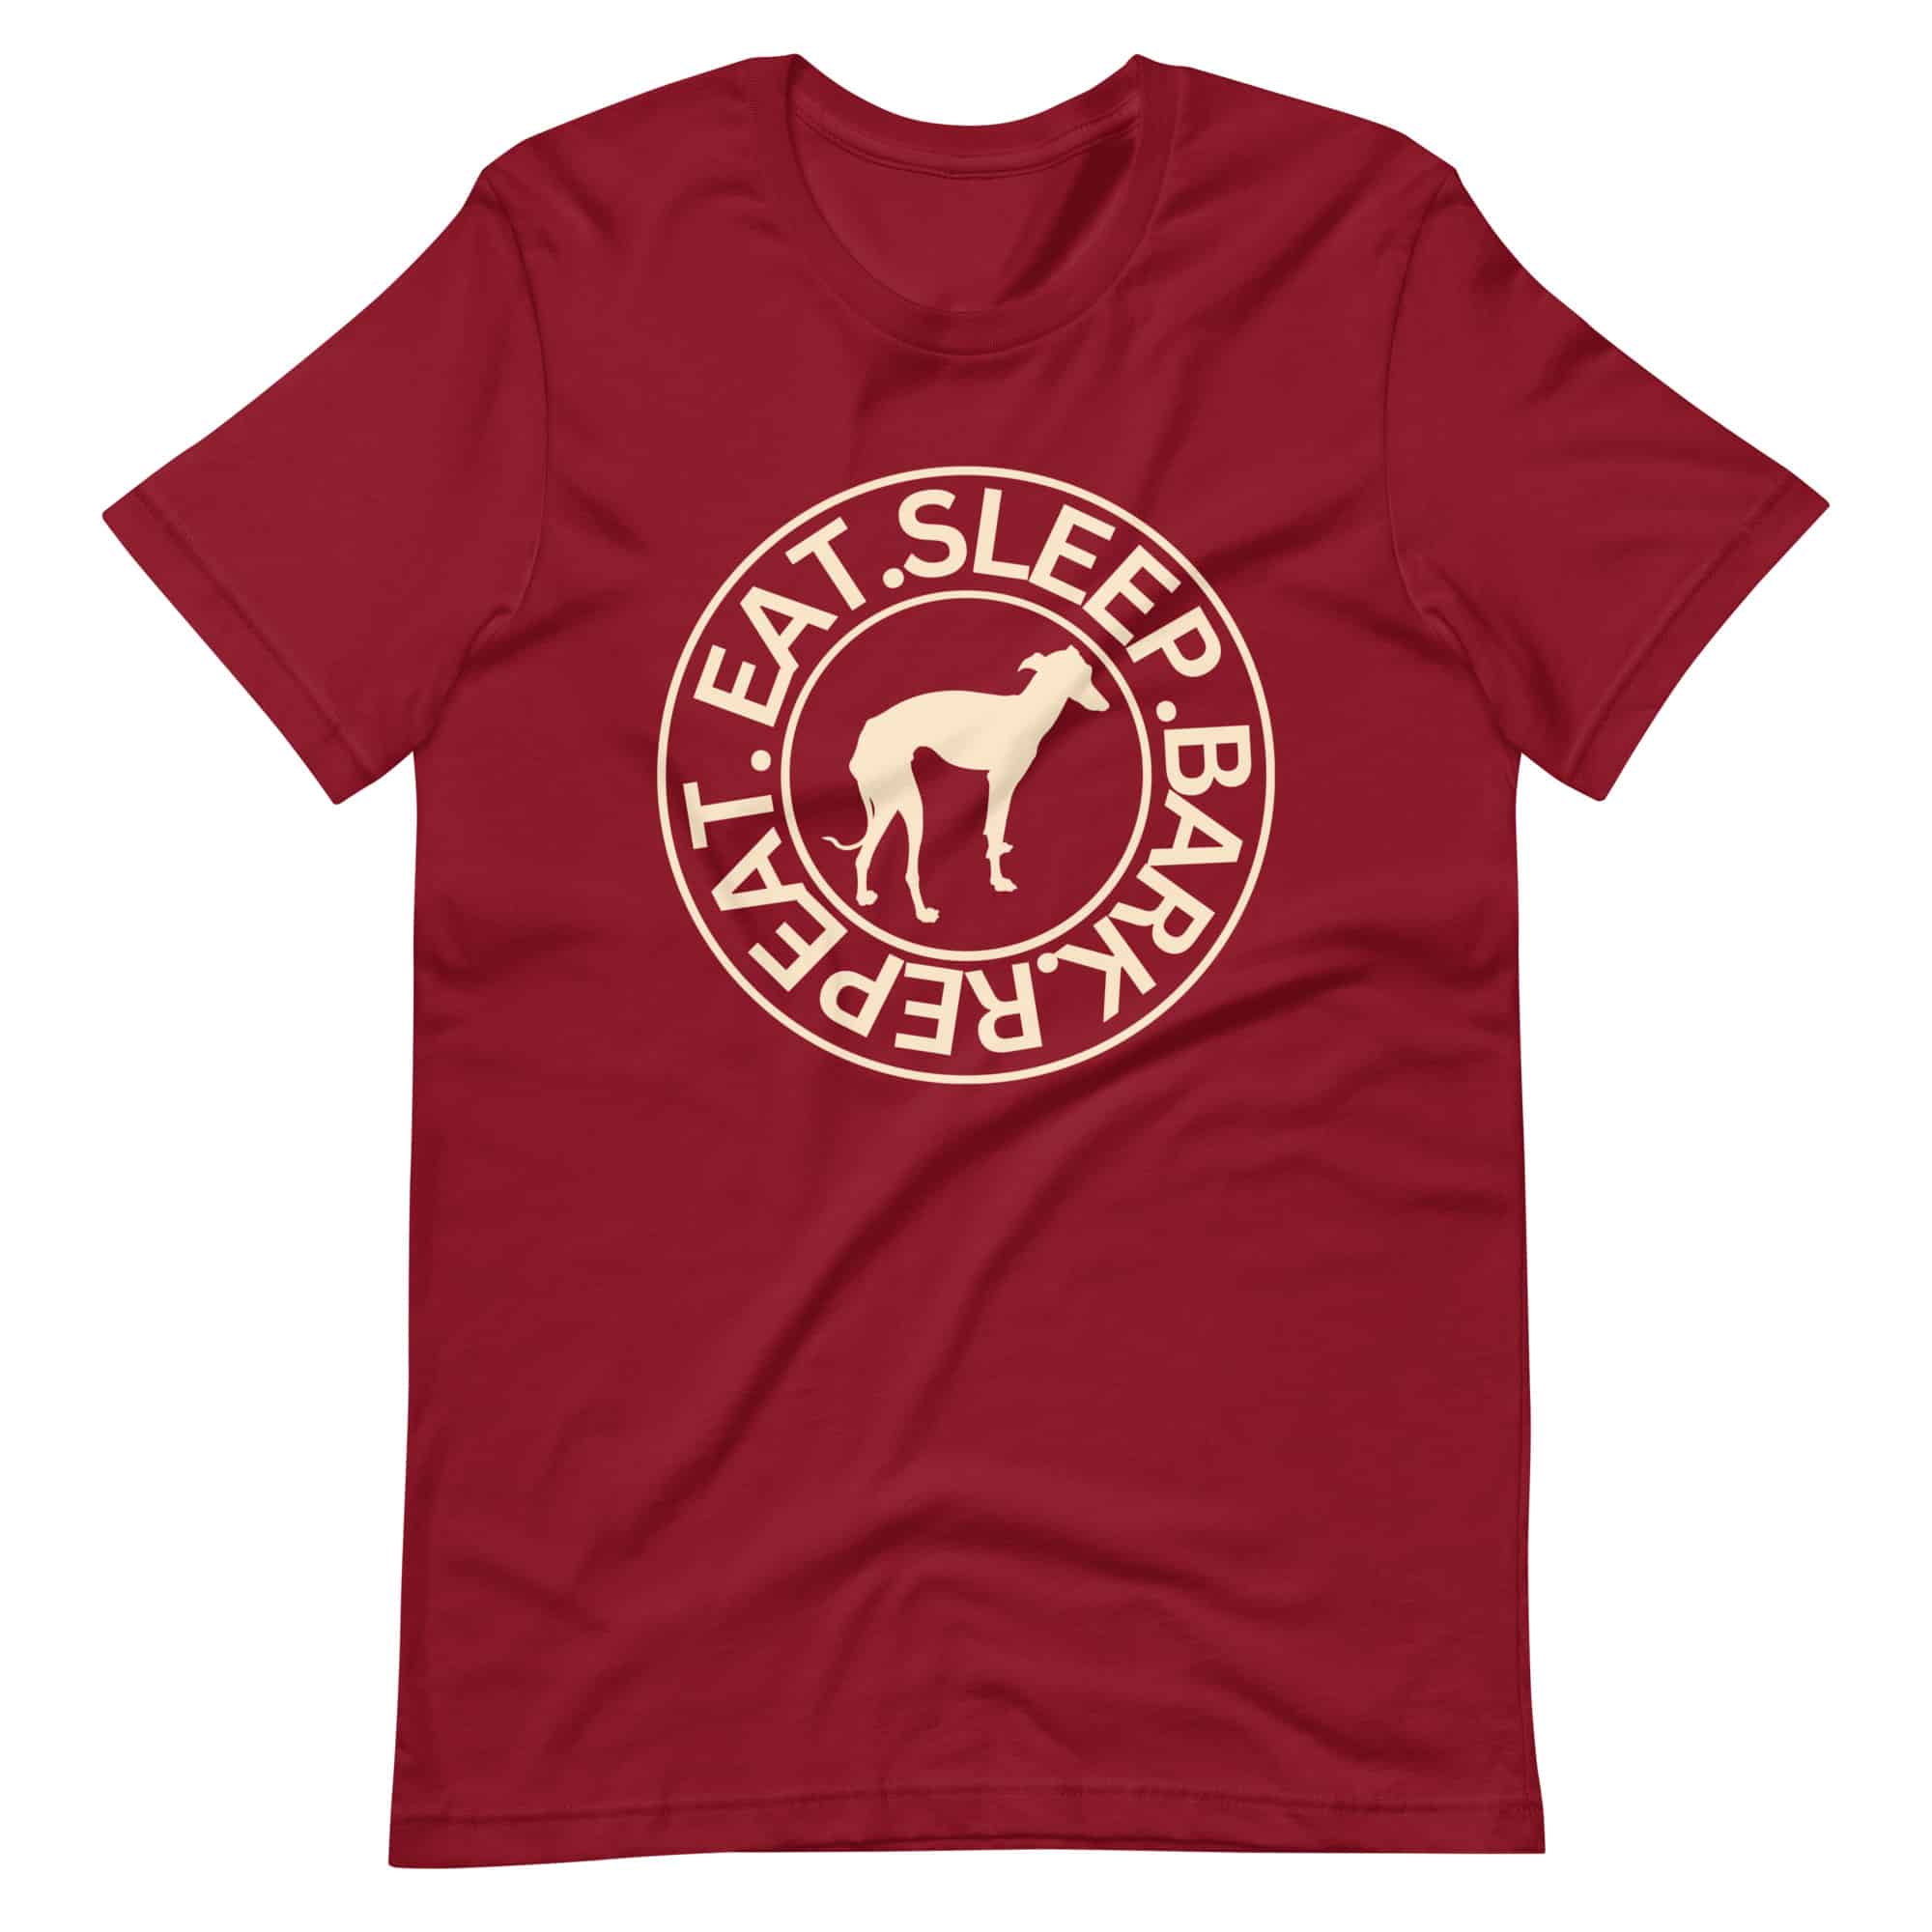 Eat Sleep Bark Repeat Italian Greyhound Unisex T-Shirt. Cardinal